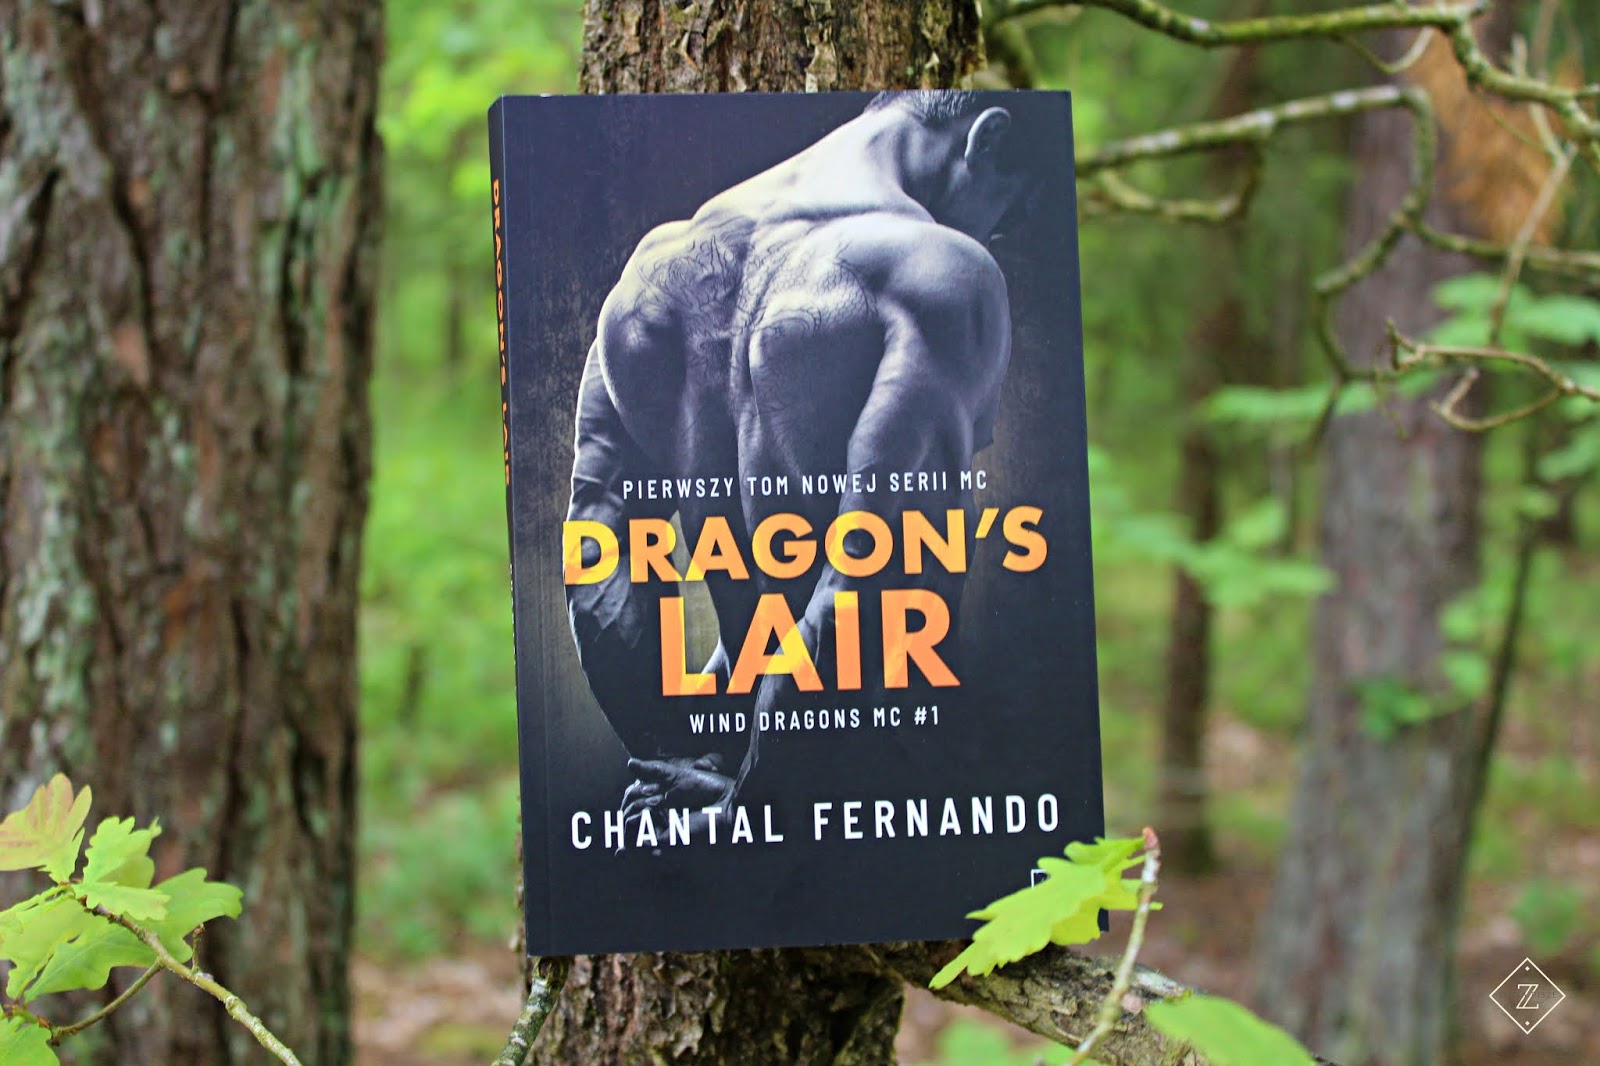 Chantal Fernando "Dragon's Lair" - recenzja patronacka